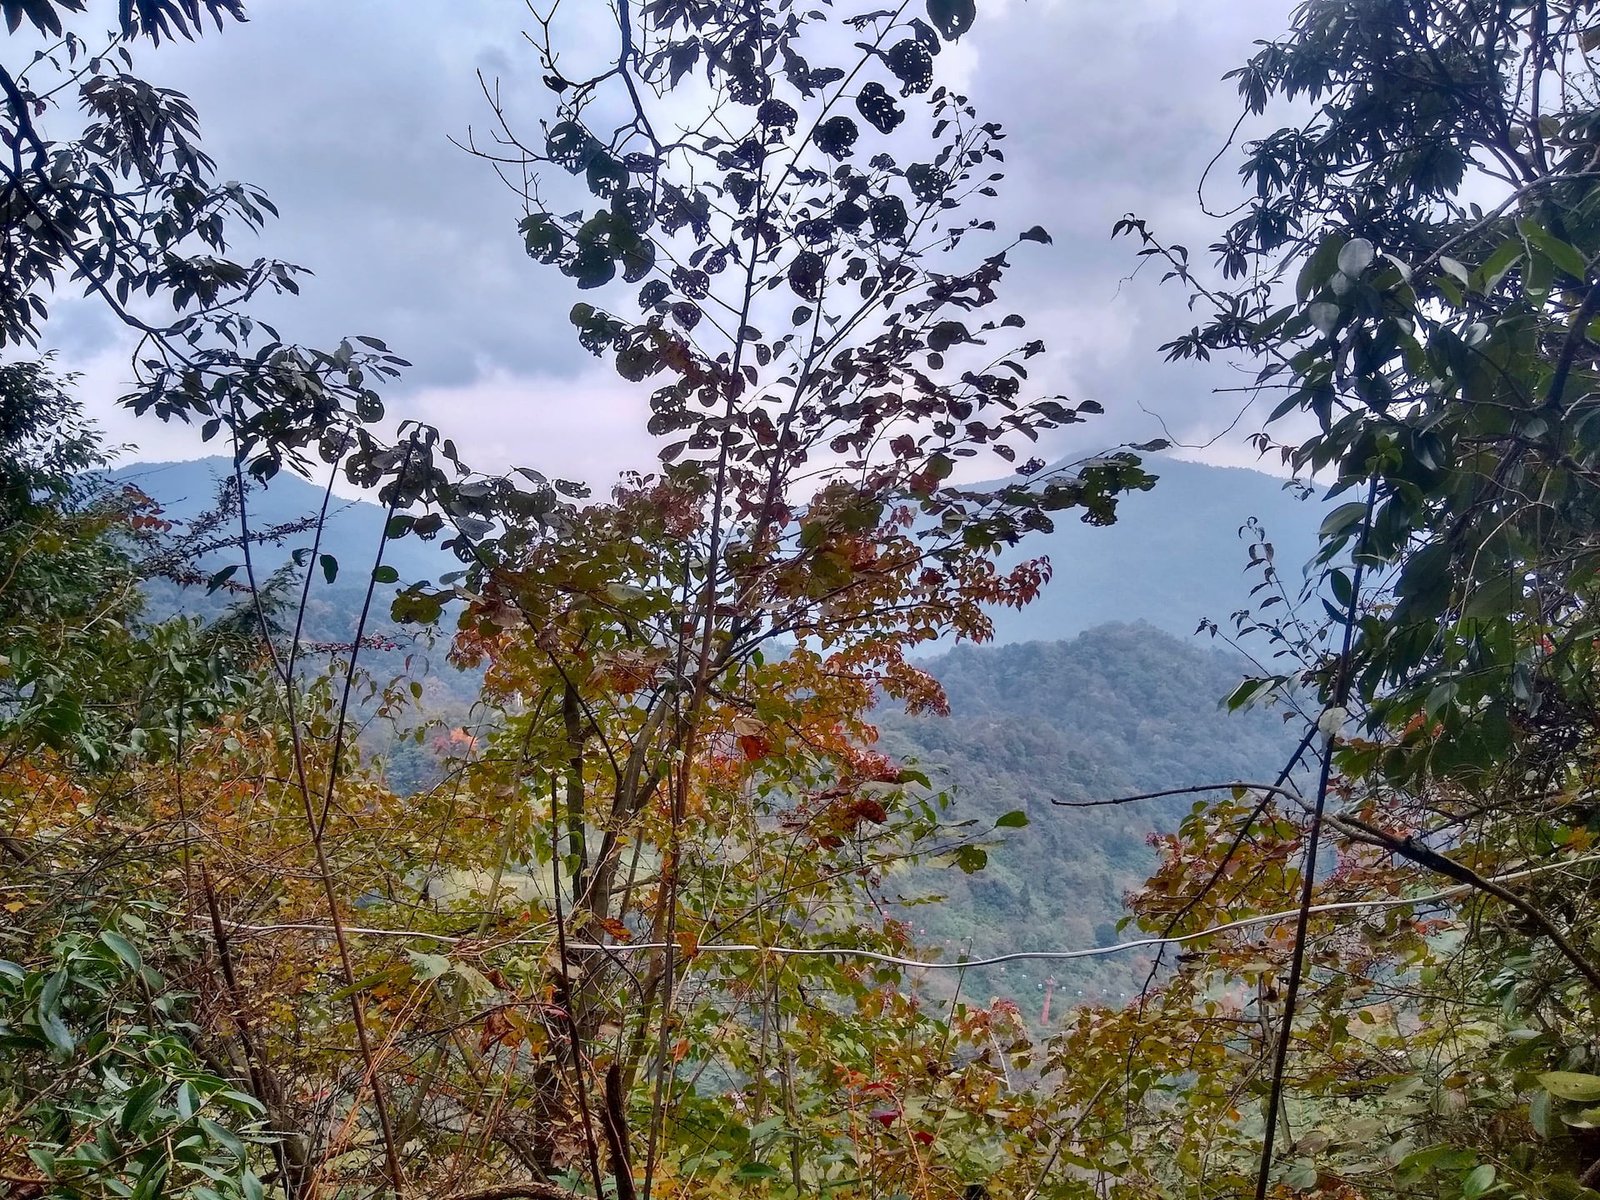 Fall foliage at Qingcheng back mountain, Sichuan Province, China